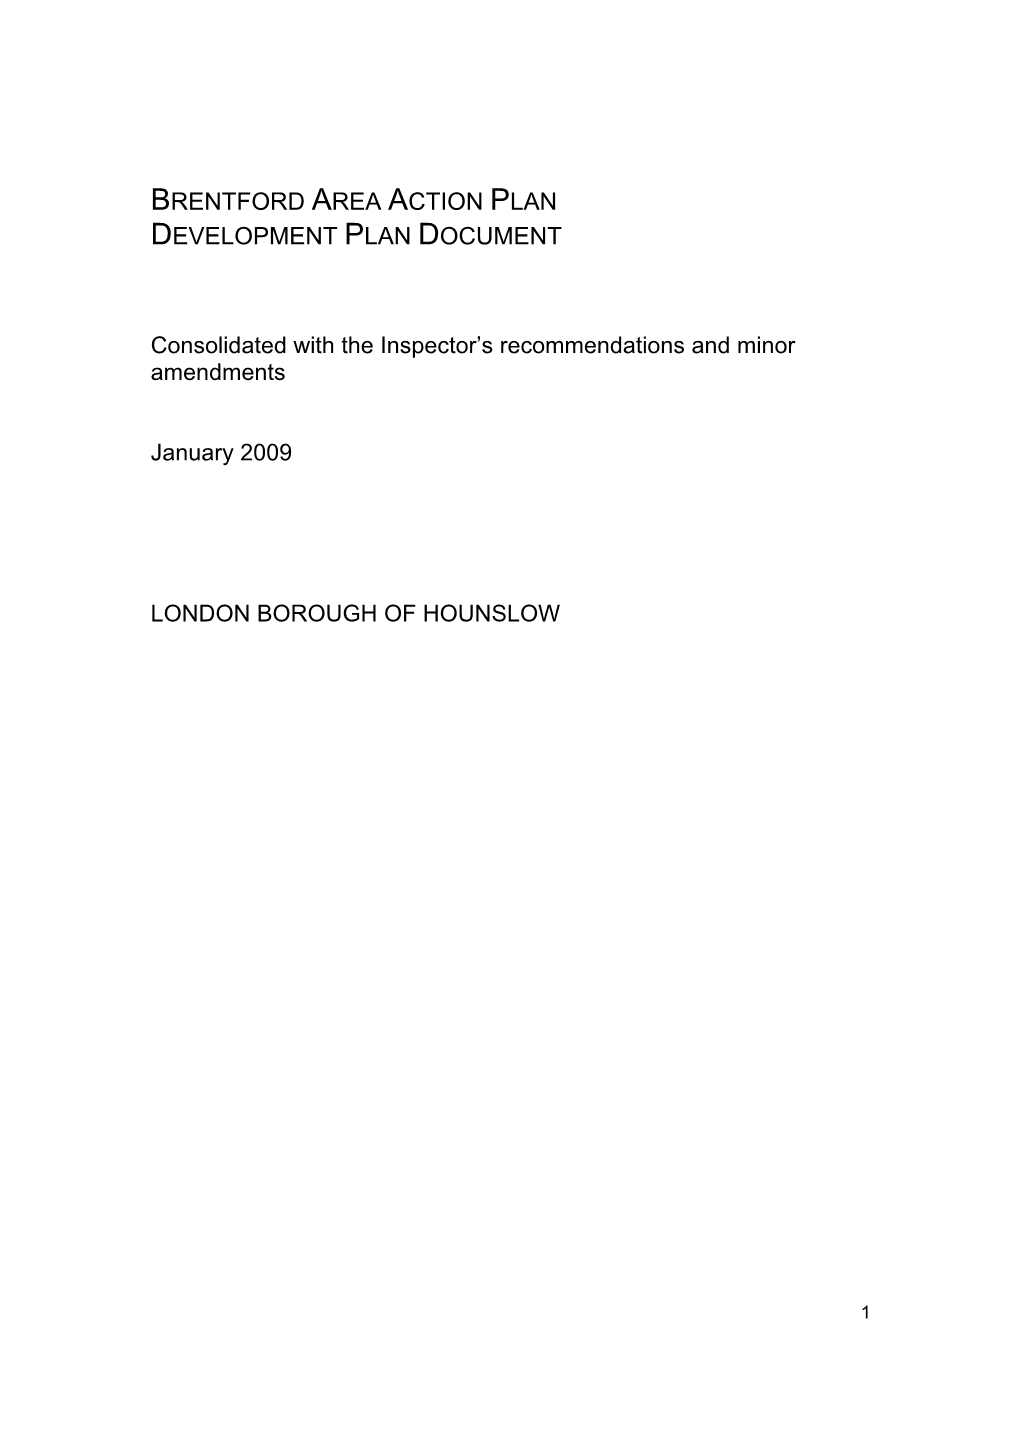 Brentford Area Action Plan Development Plan Document